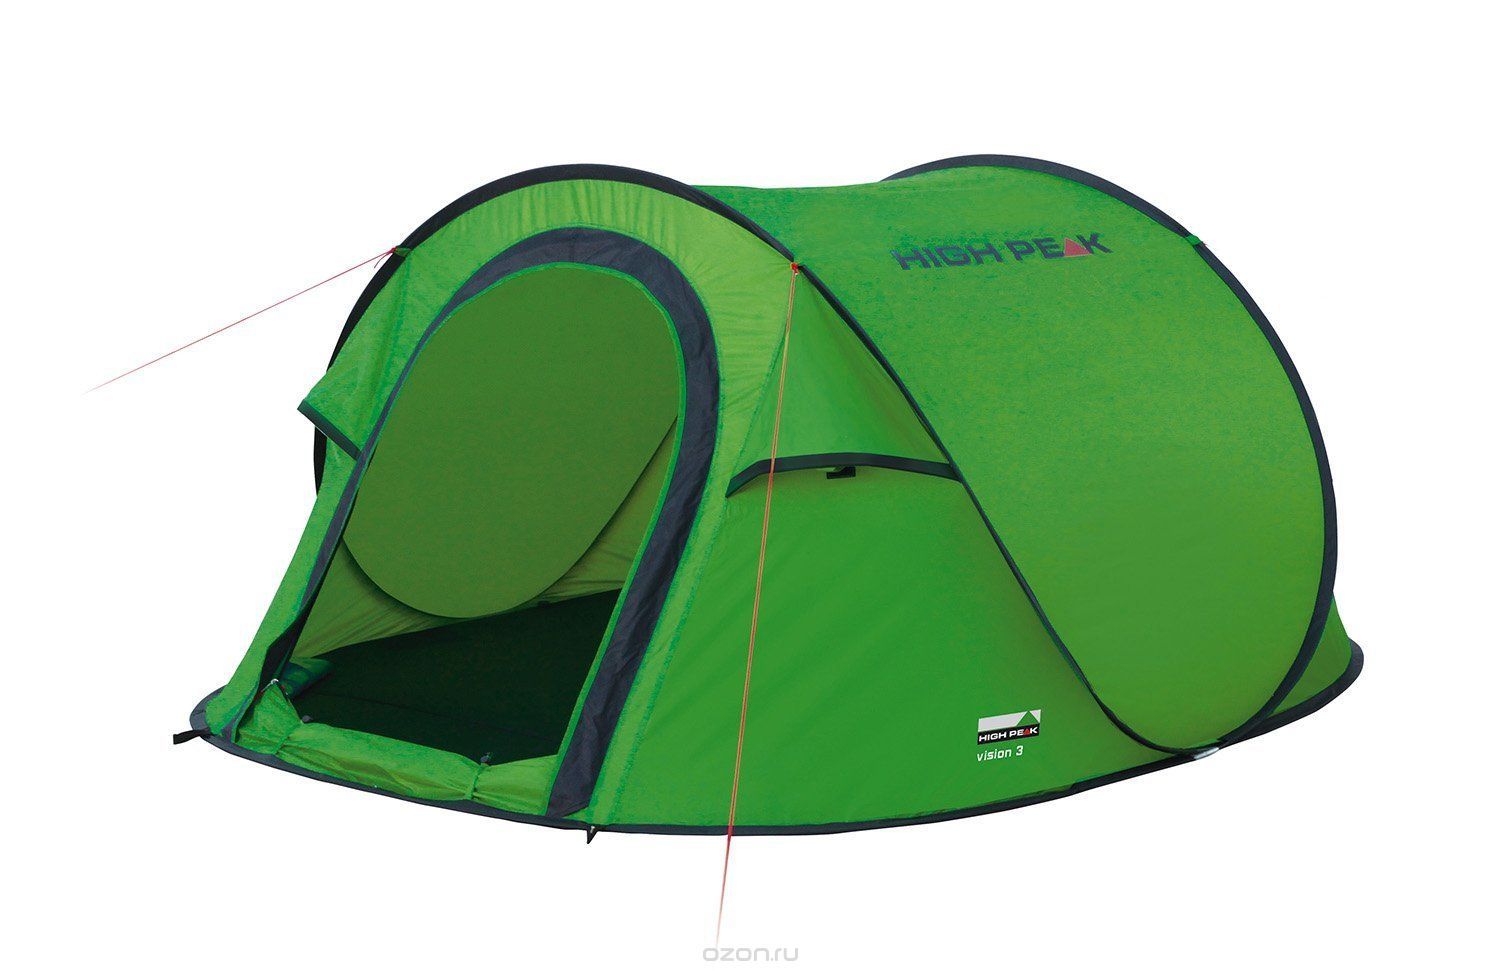 Купить палатку туристическую цены. High Peak Vision 2 туристическая палатка. High Peak Vision 3. Палатка High Peak 3-х местная. Палатка Freetime Duo 4 LX.